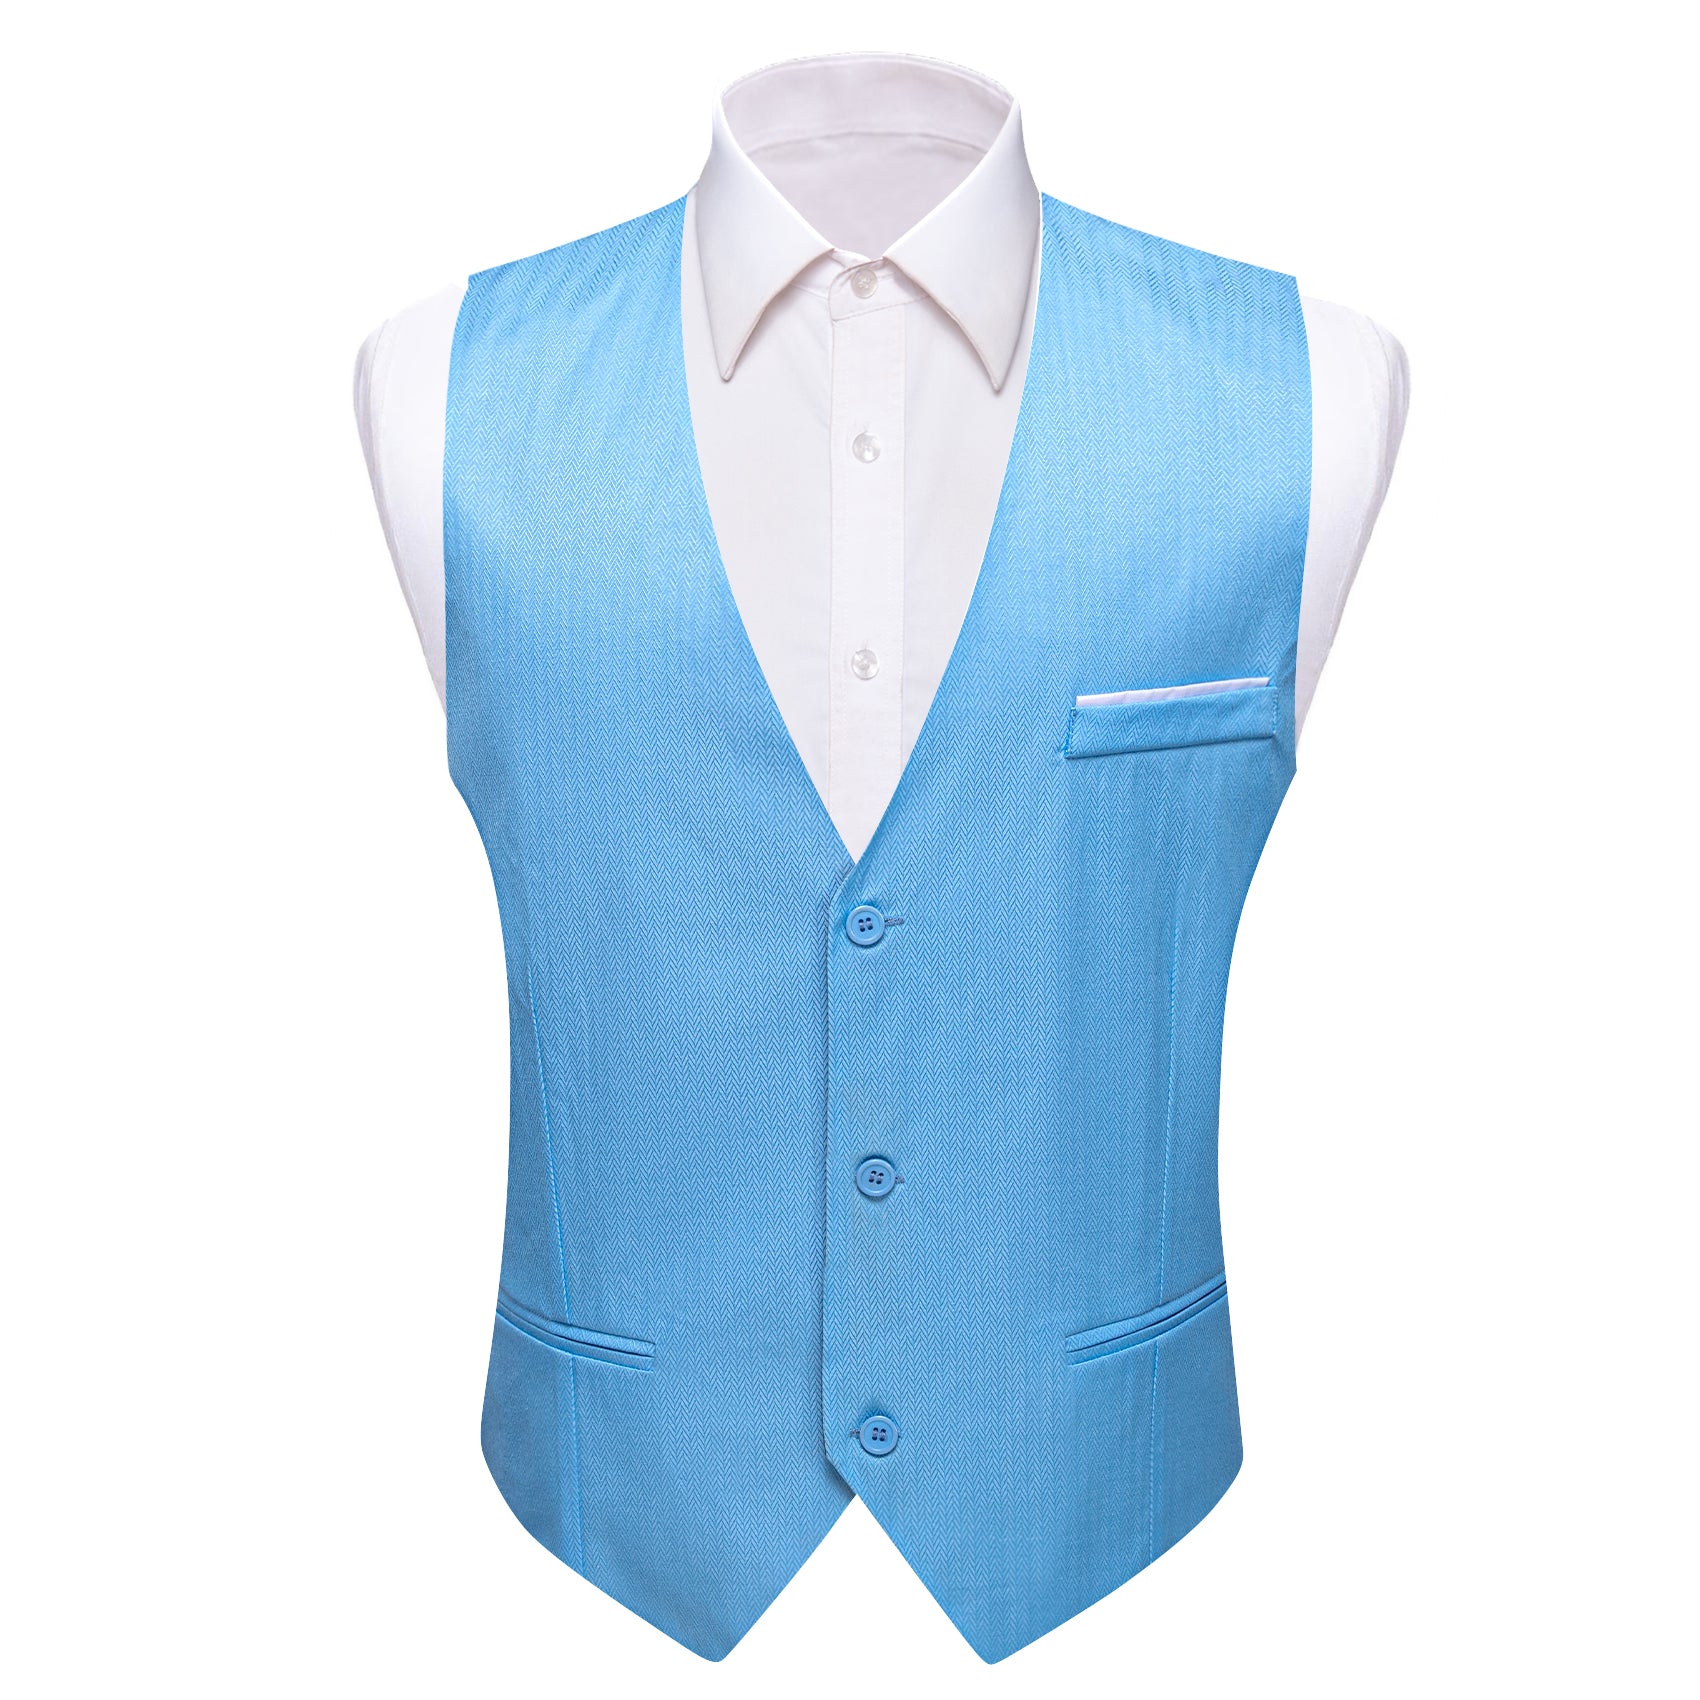 Men's Sky Blue Solid Vest Suit for Business